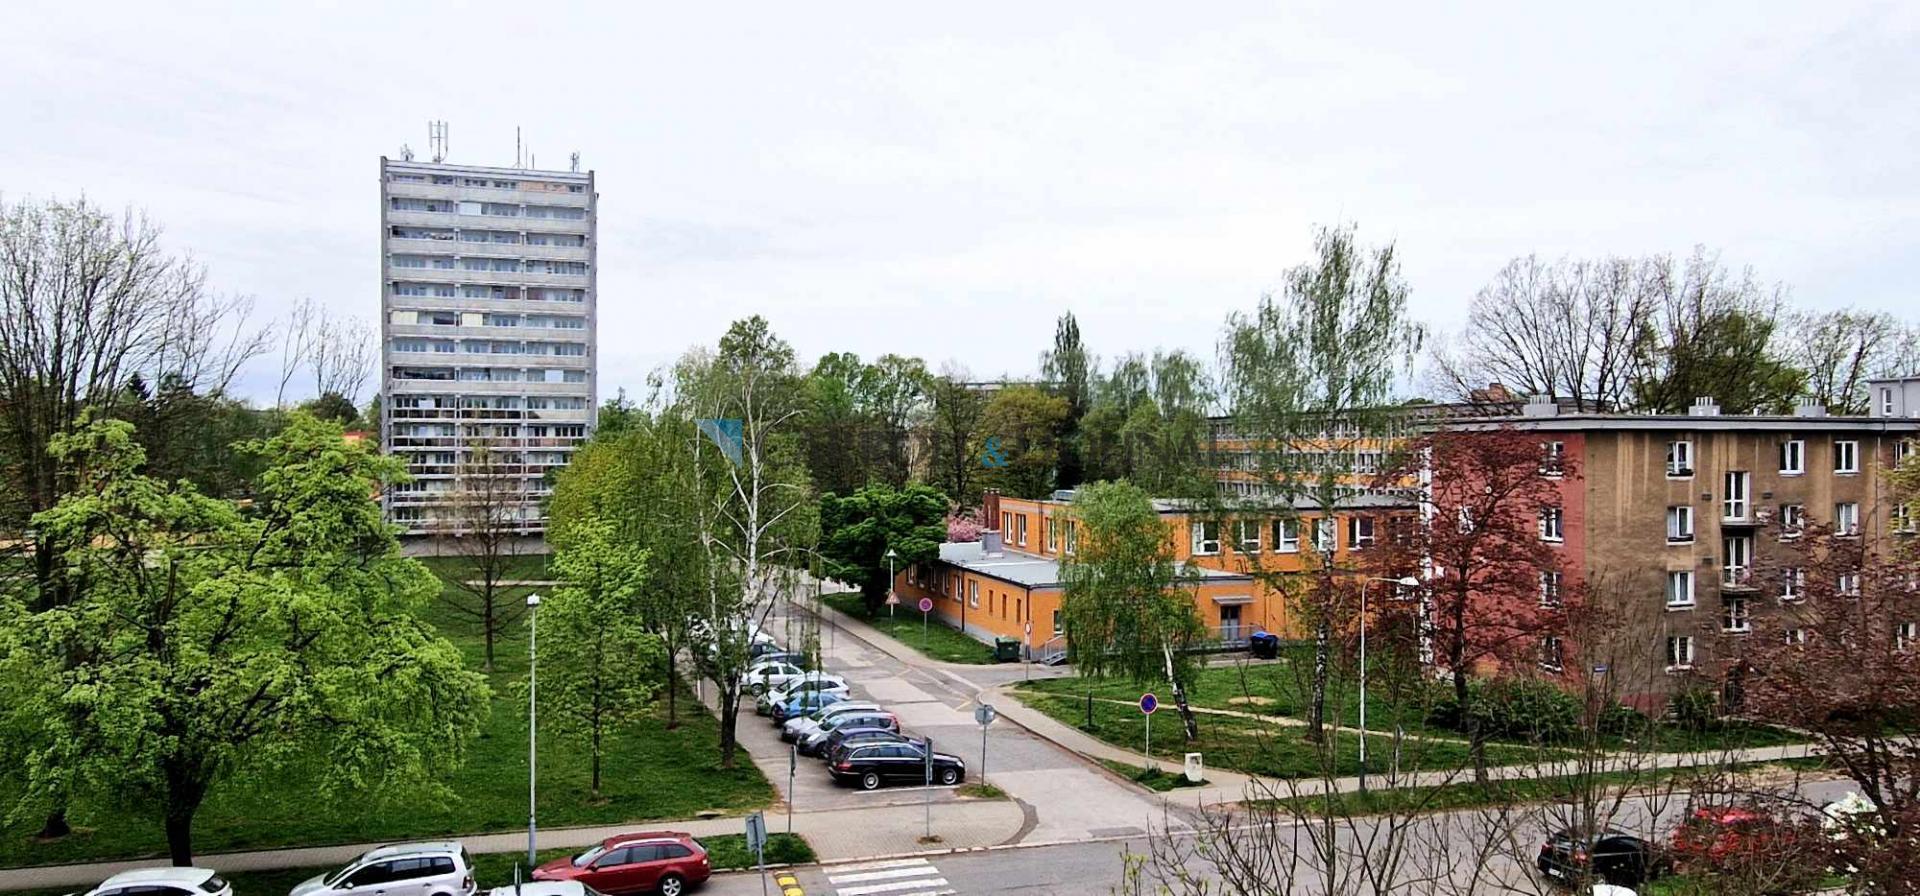 Prodej bytu 2+1 s balkónem, ulice Kosmonautů, Ostrava Zábřeh